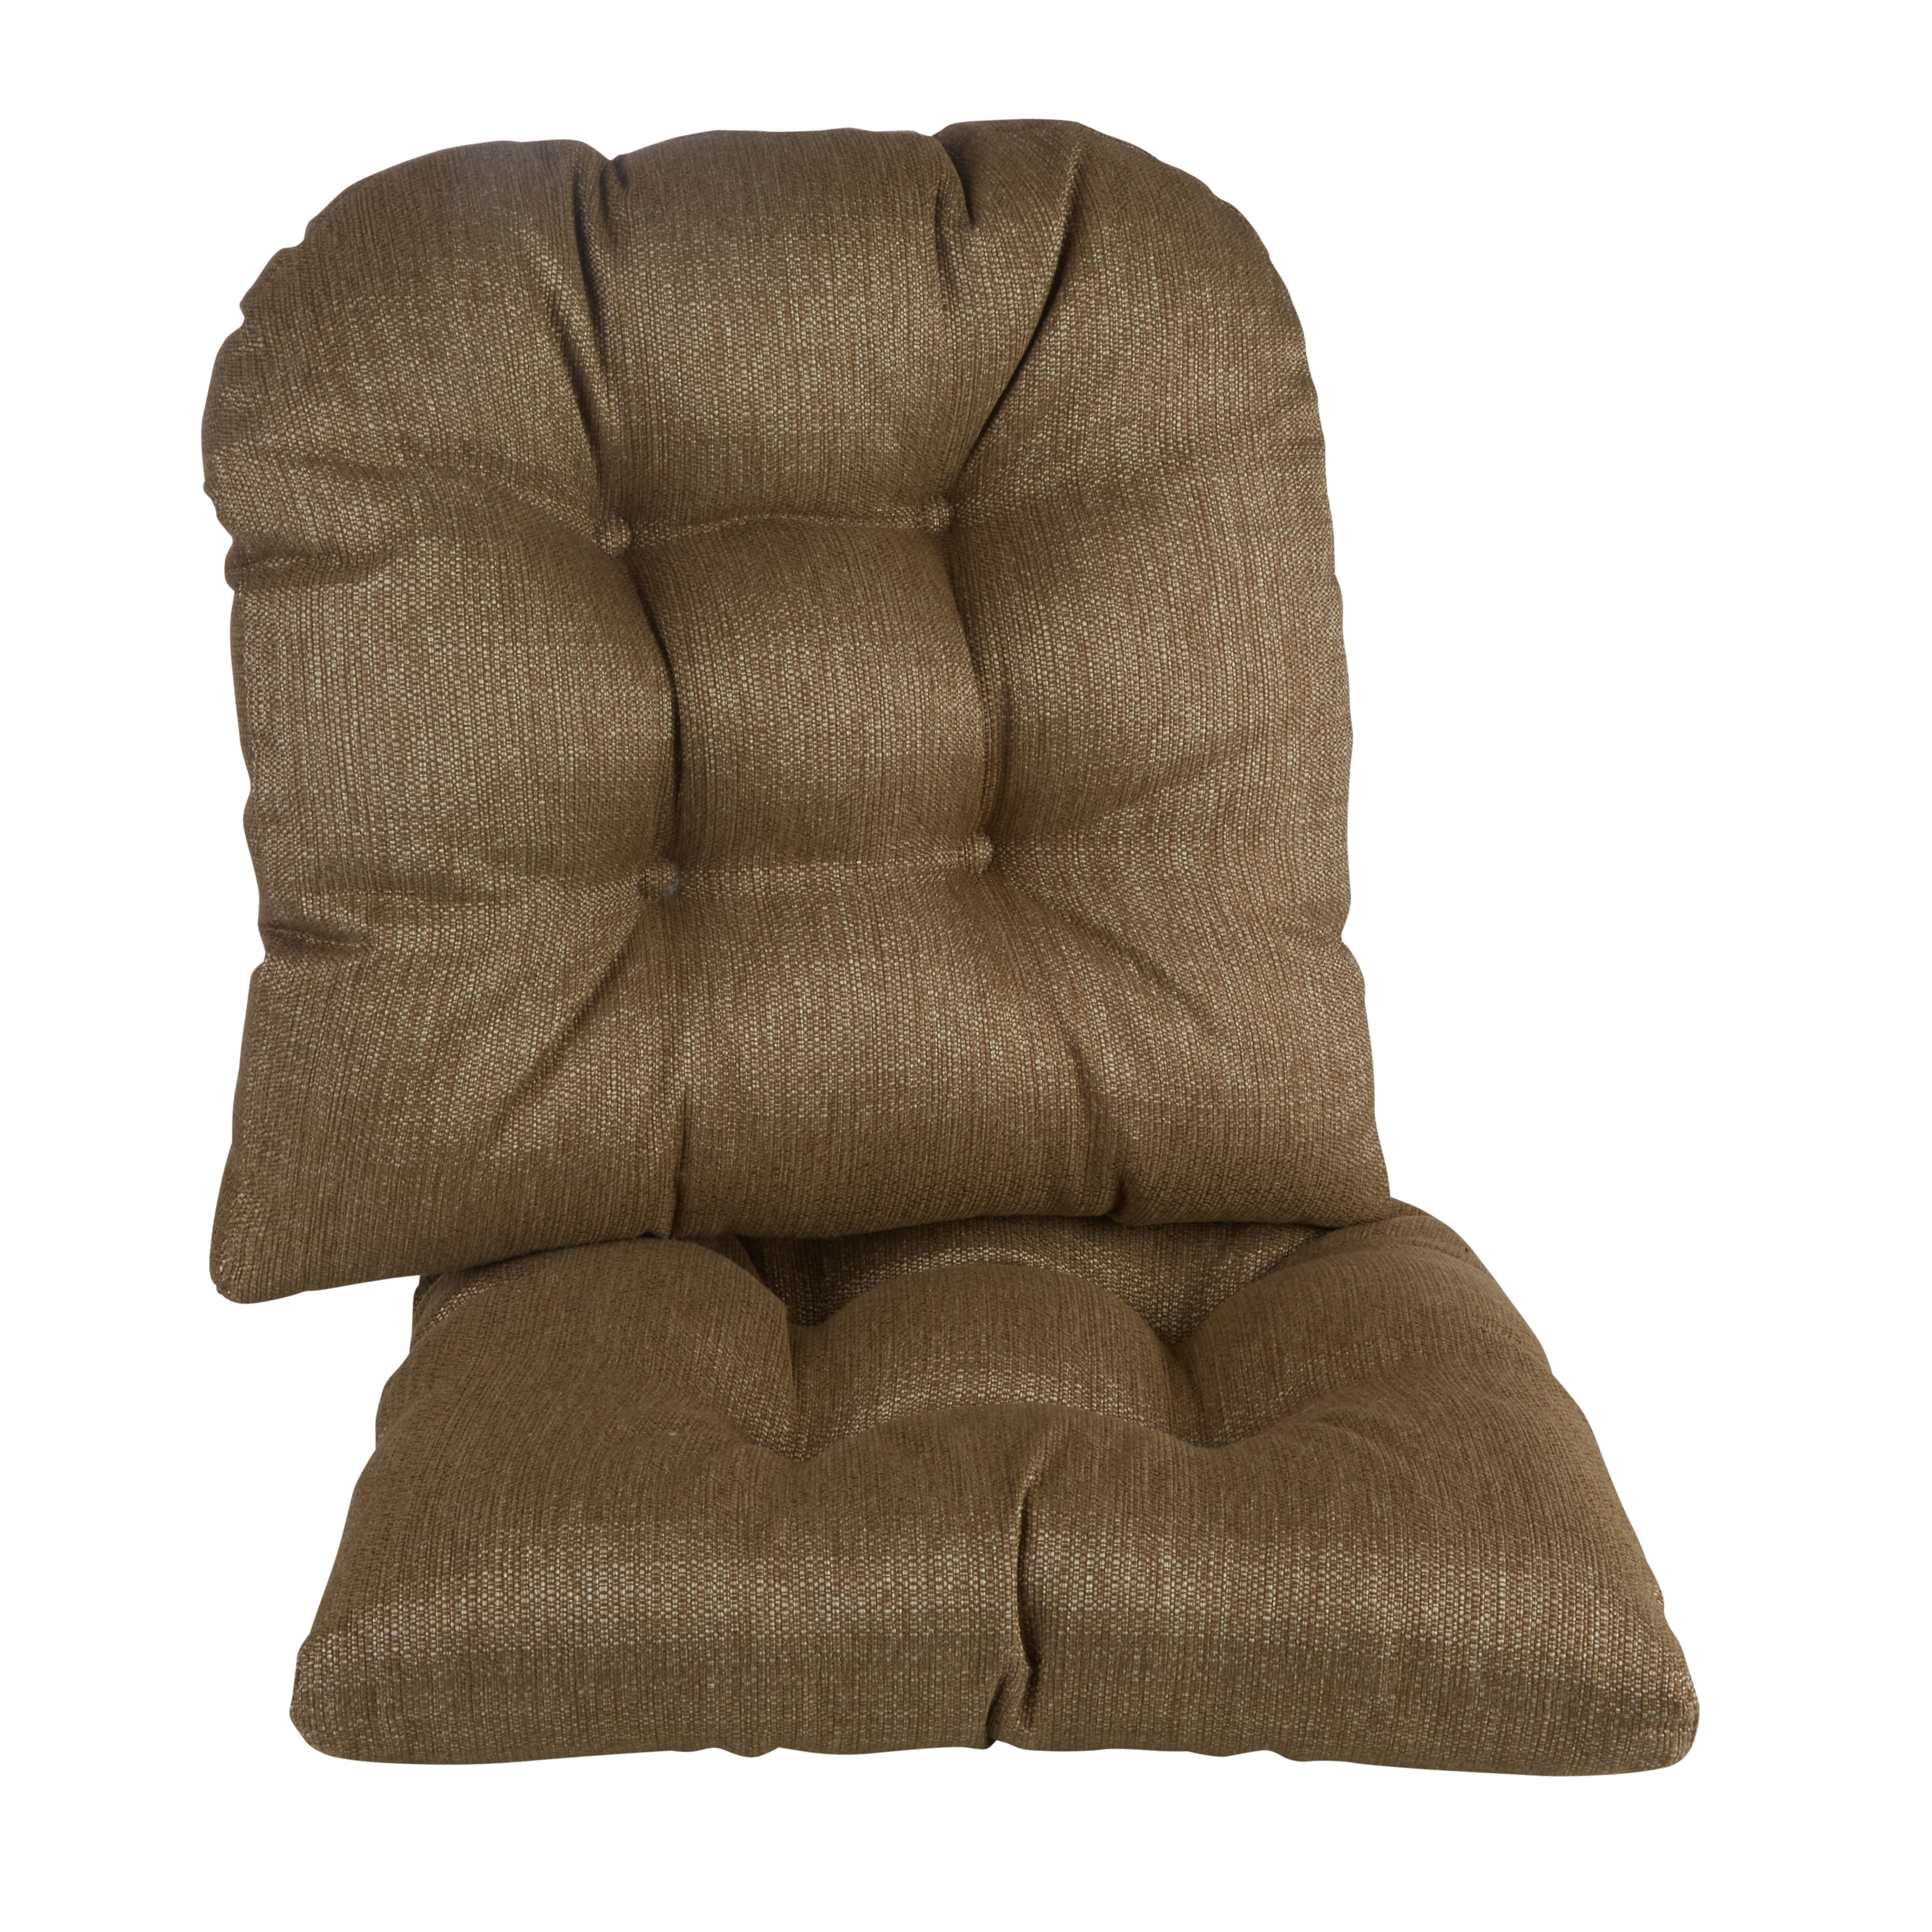 Klear Vu Saturn Non-Slip Extra Large Chair Cushion 20 x 18 x 3, Set of  2, Wedge Blue 2 Count